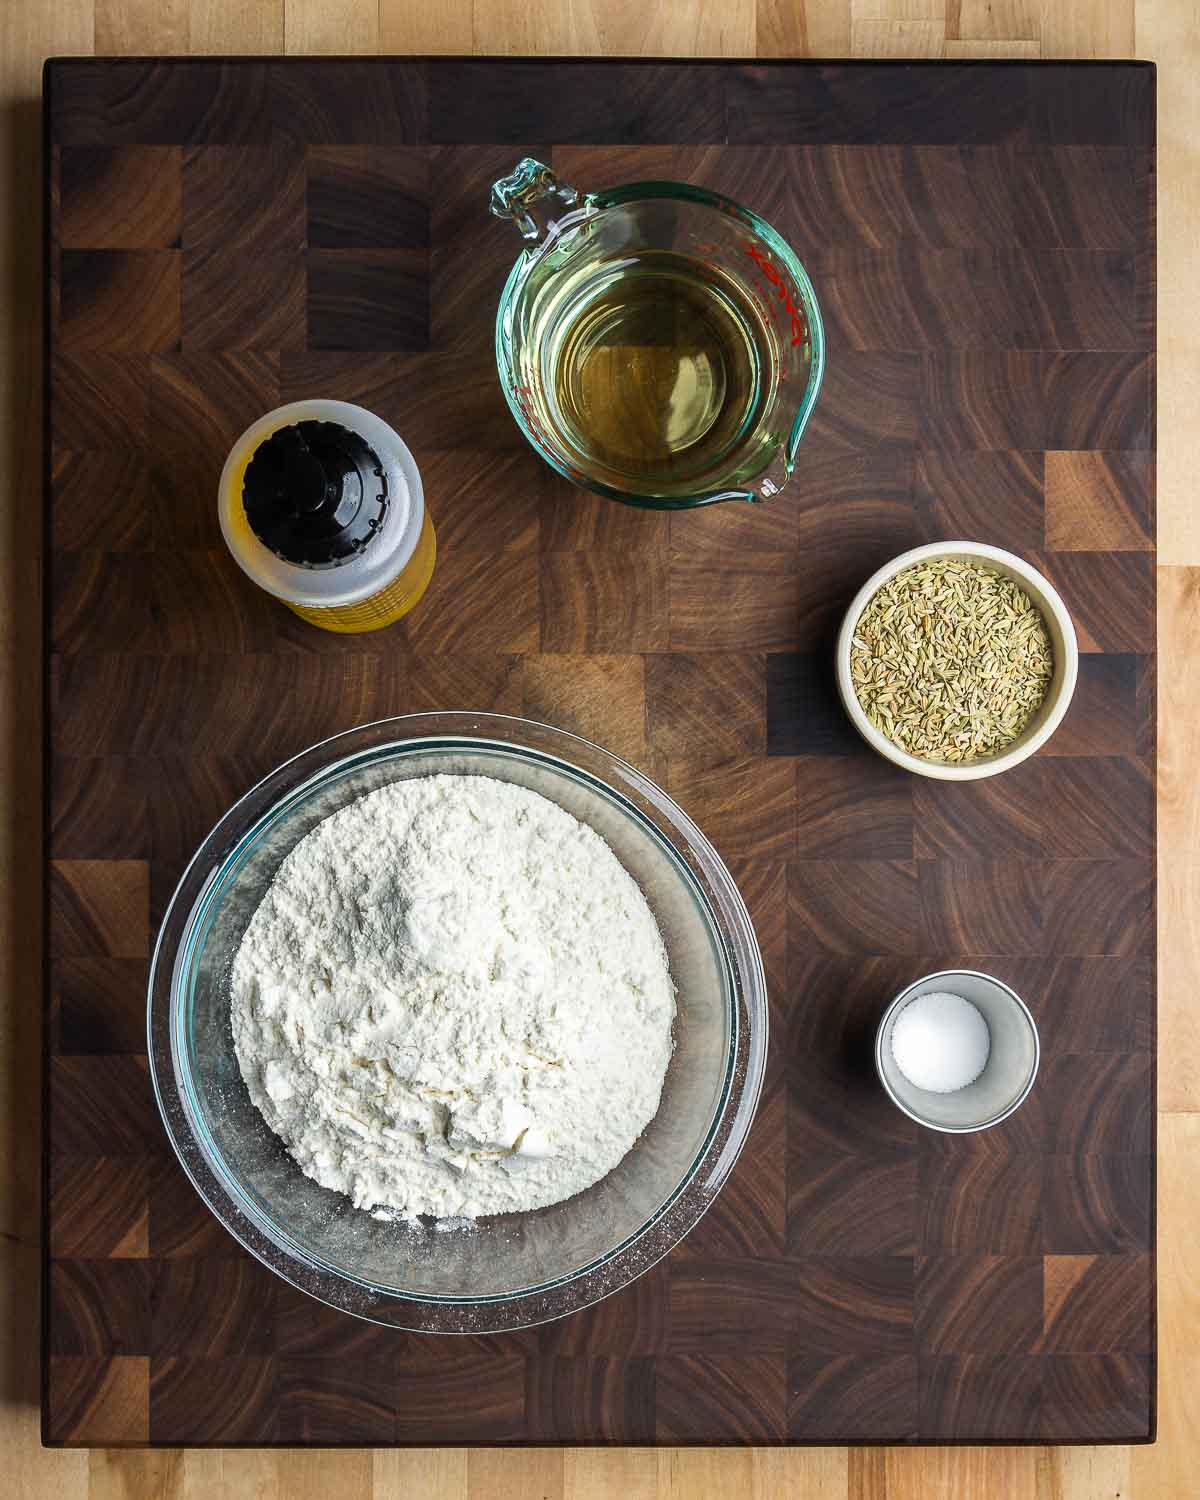 Ingredients shown: olive oil, white wine, fennel seeds, flour, and salt.